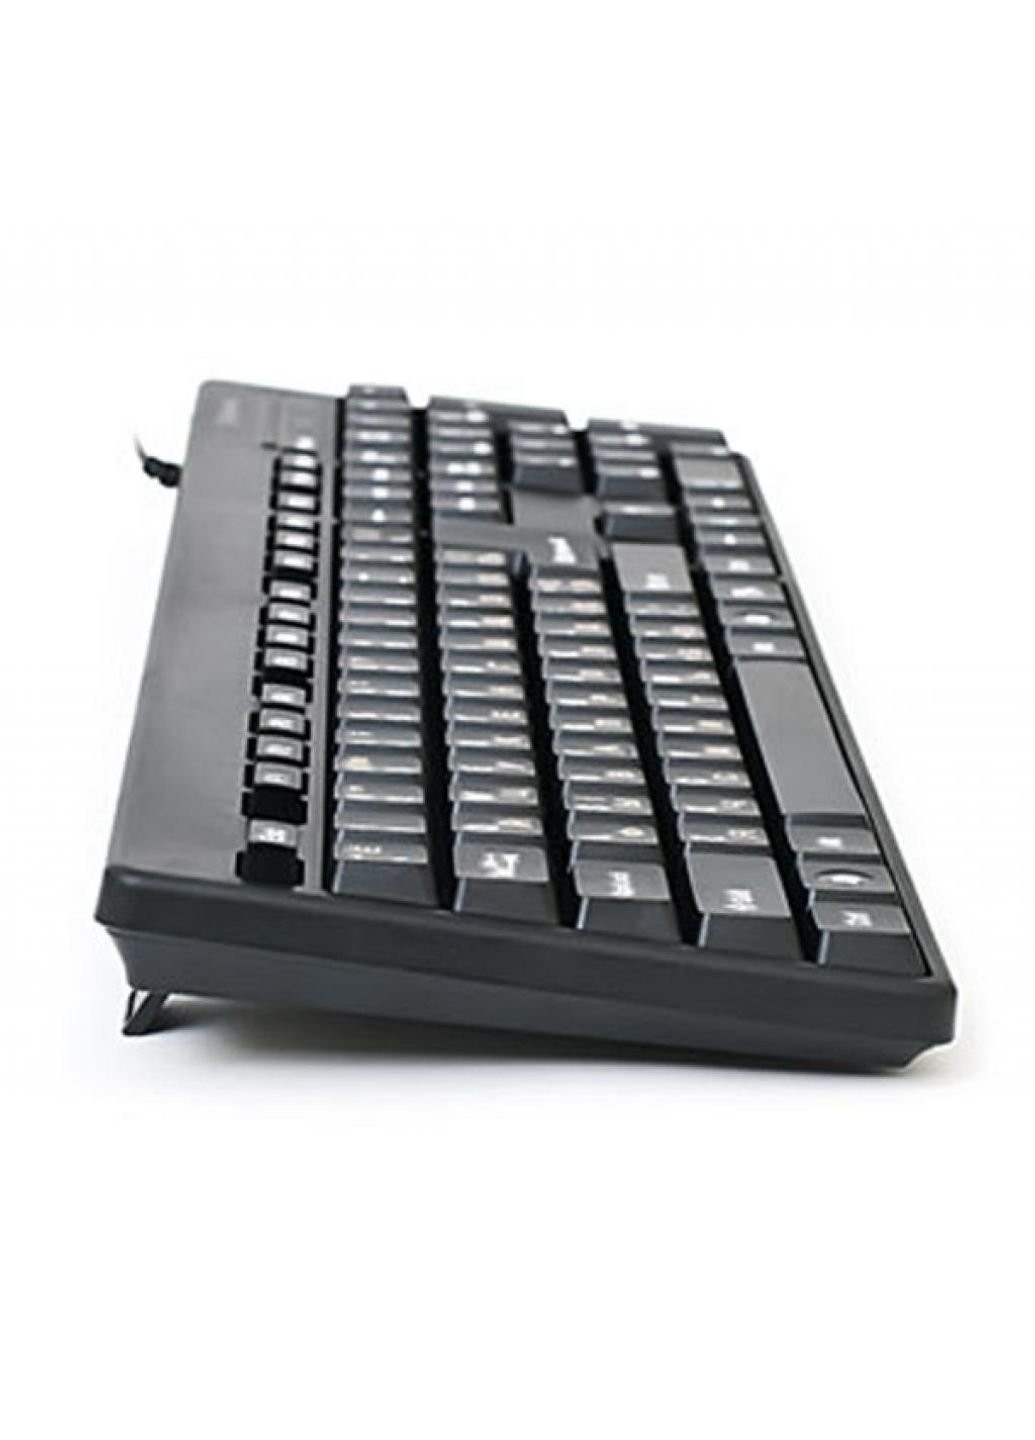 Клавиатура Real-El 502 standard, usb, black (253468393)